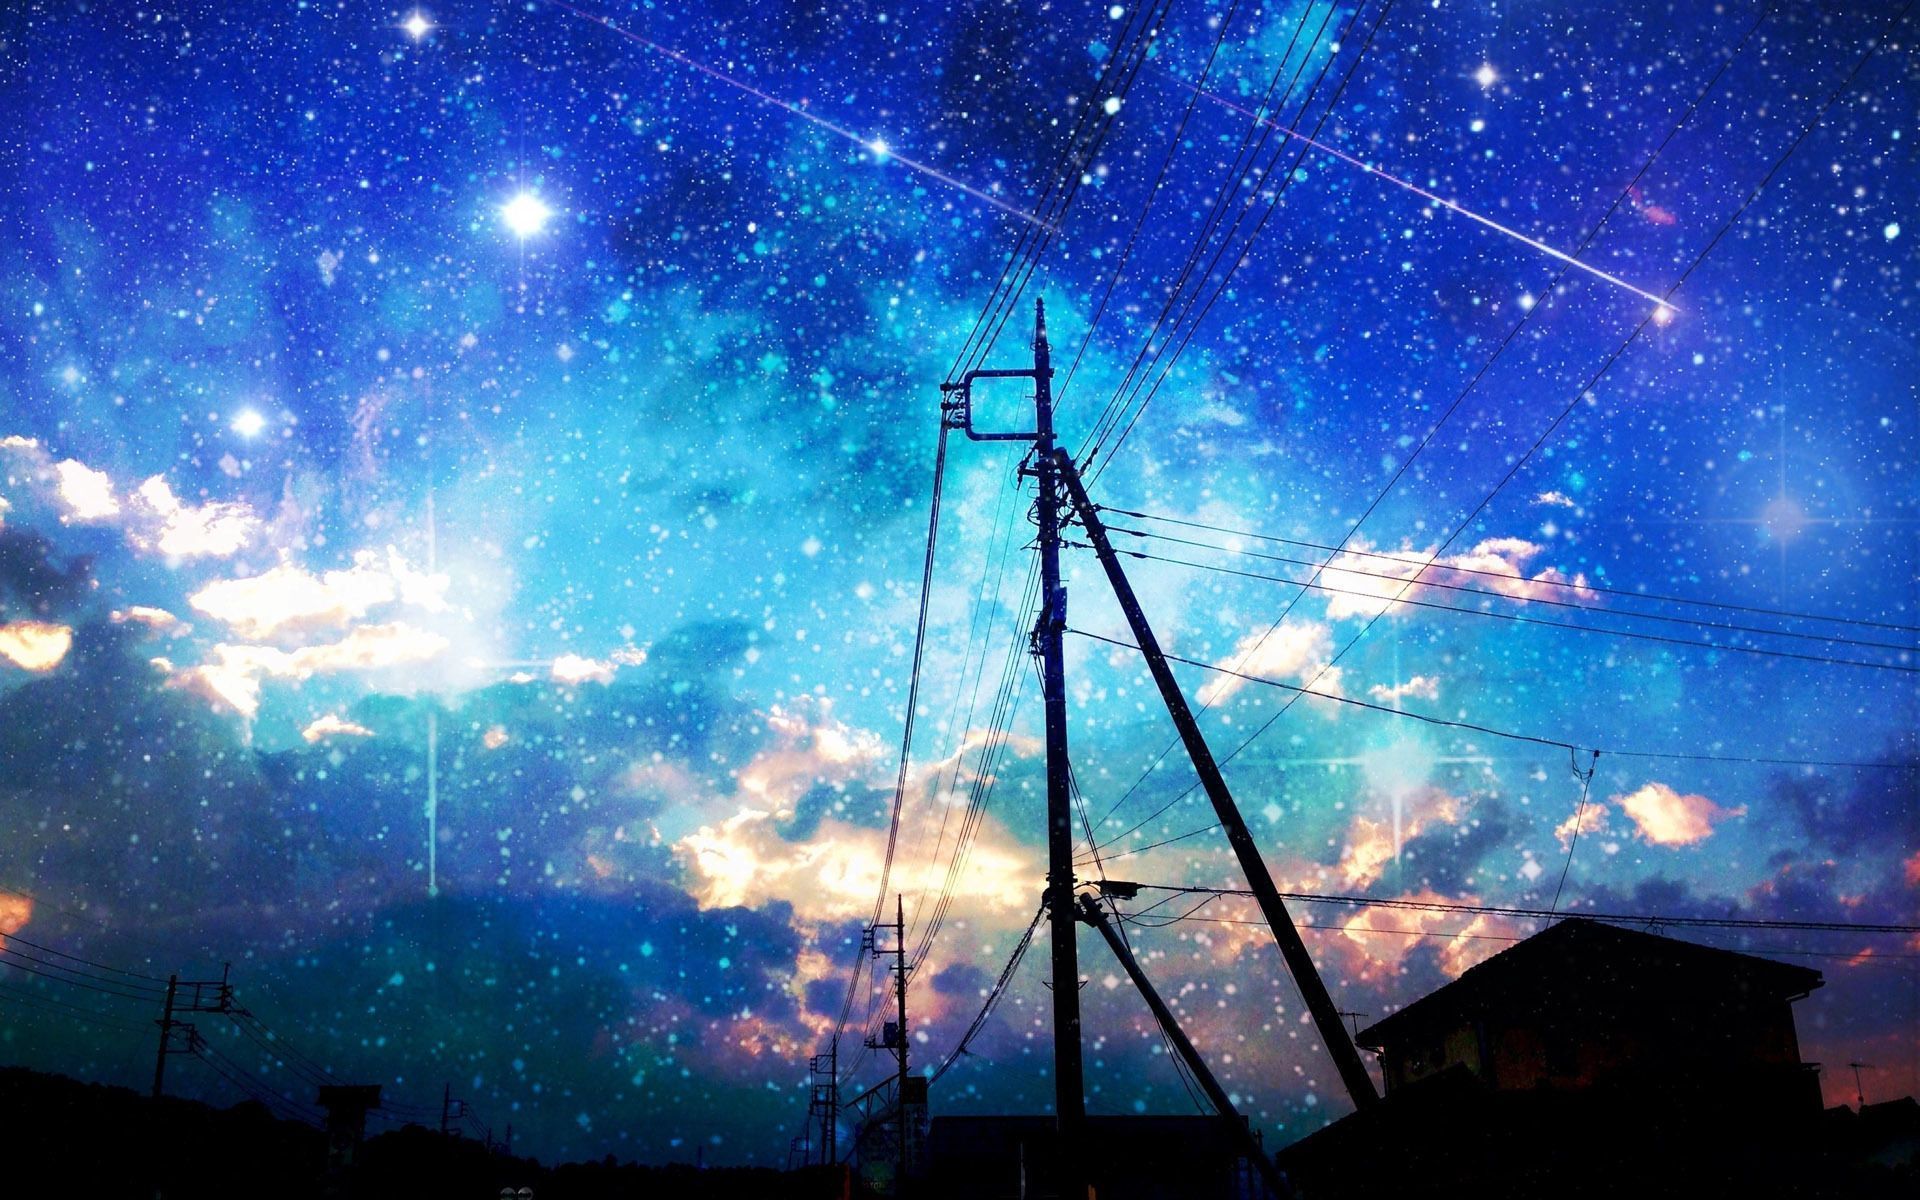 Starry Sky wallpaper | 1920x1200 | #66198